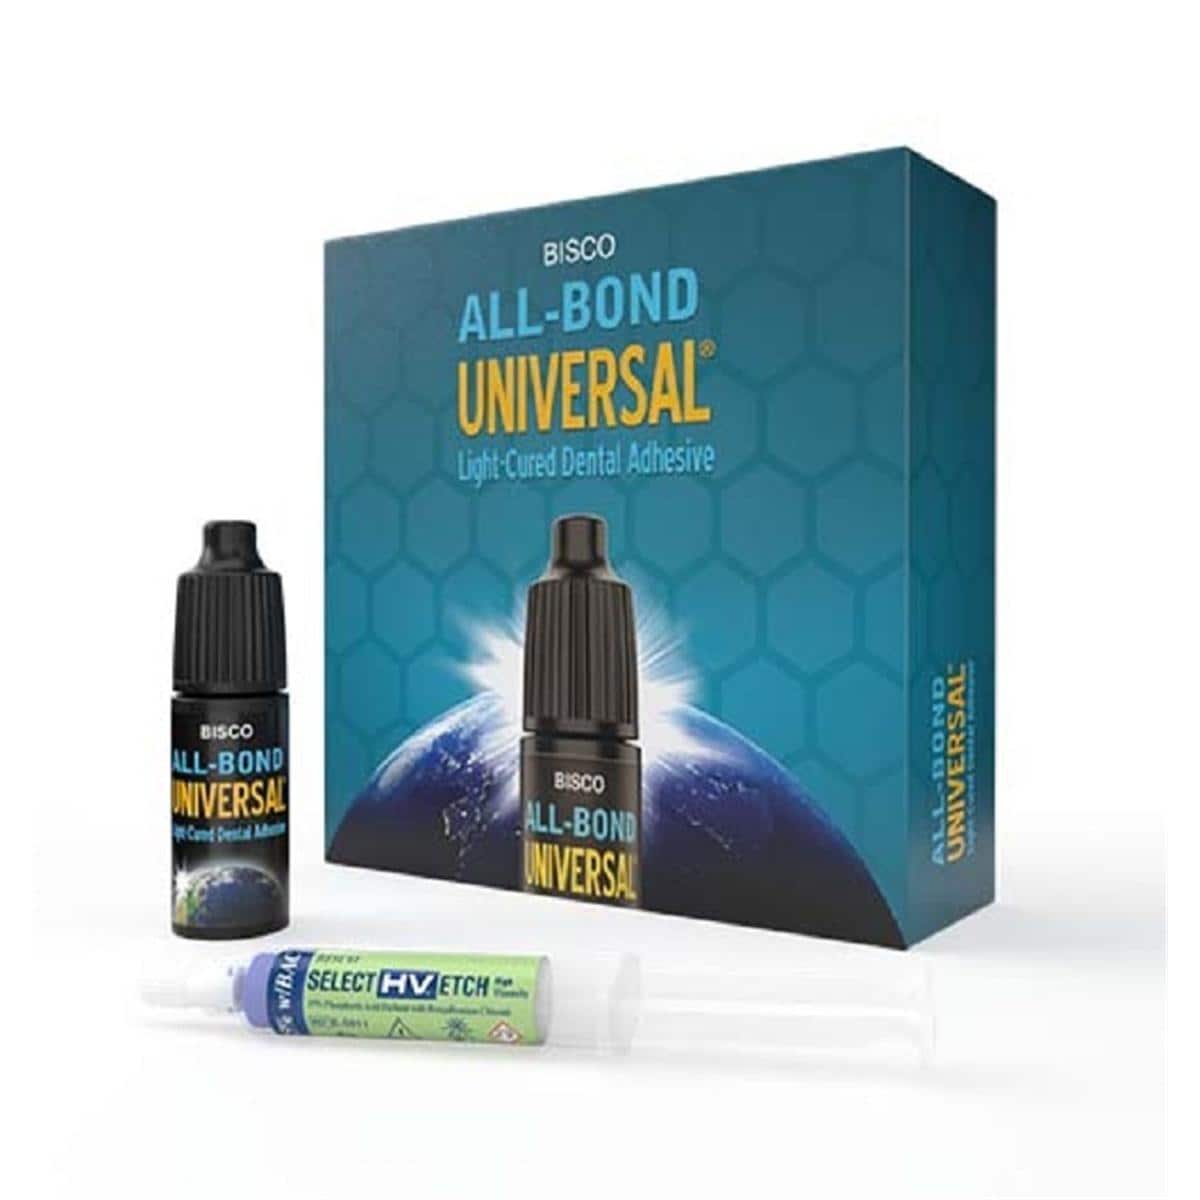 All-Bond Universal Standard kit - Complete set